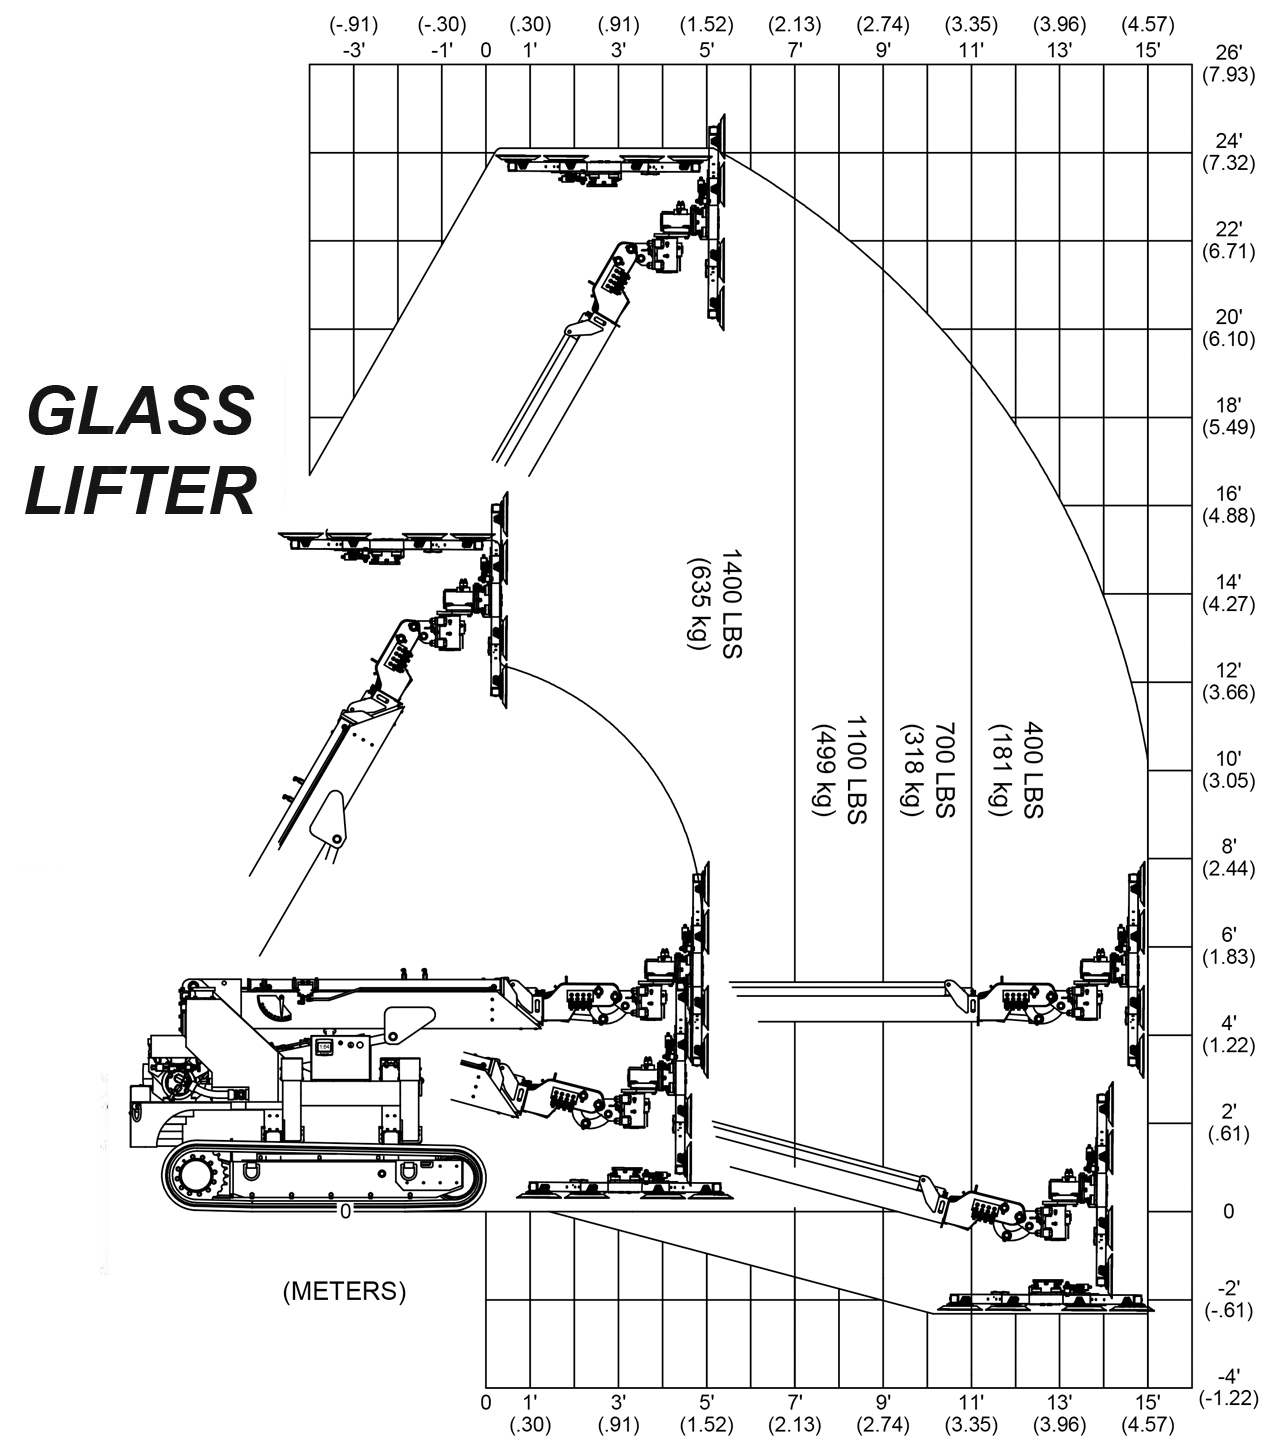 Brandon Trax Glass Lifter Load Capacity